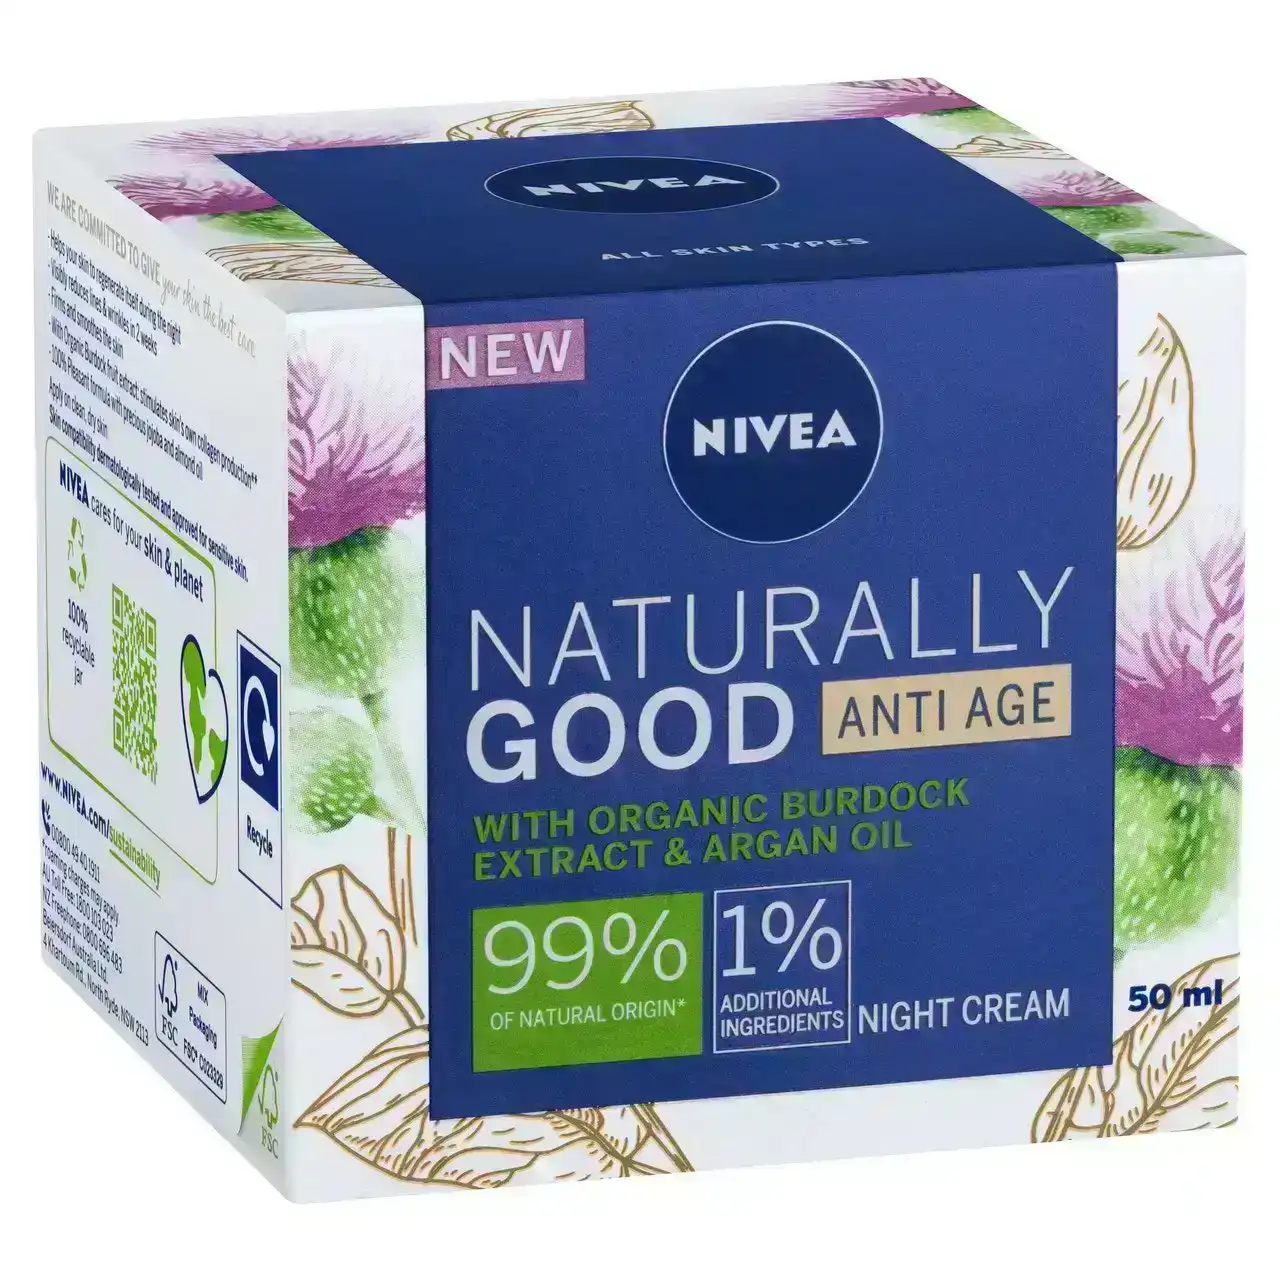 Nivea Naturally Good Anti Age Night Cream with Burdock Extract